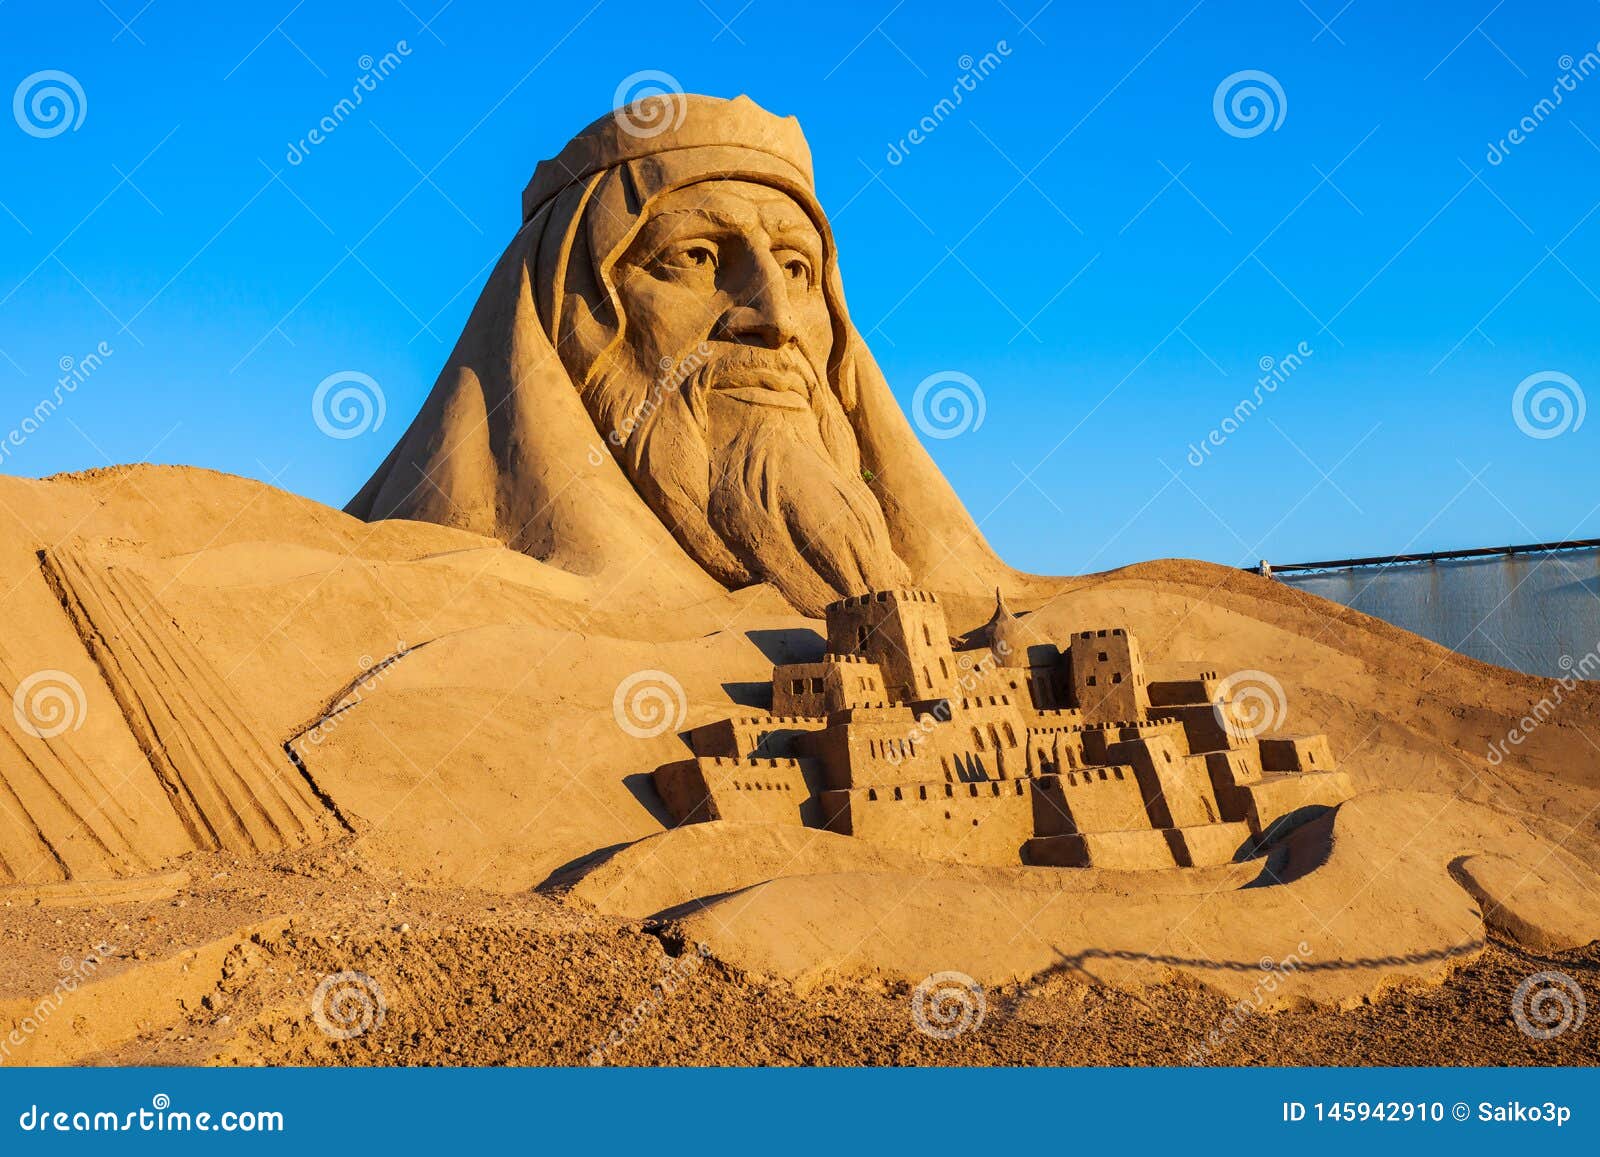 Antalya Sandland Sand Sculpture Museum Editorial Image - Image of arab ...